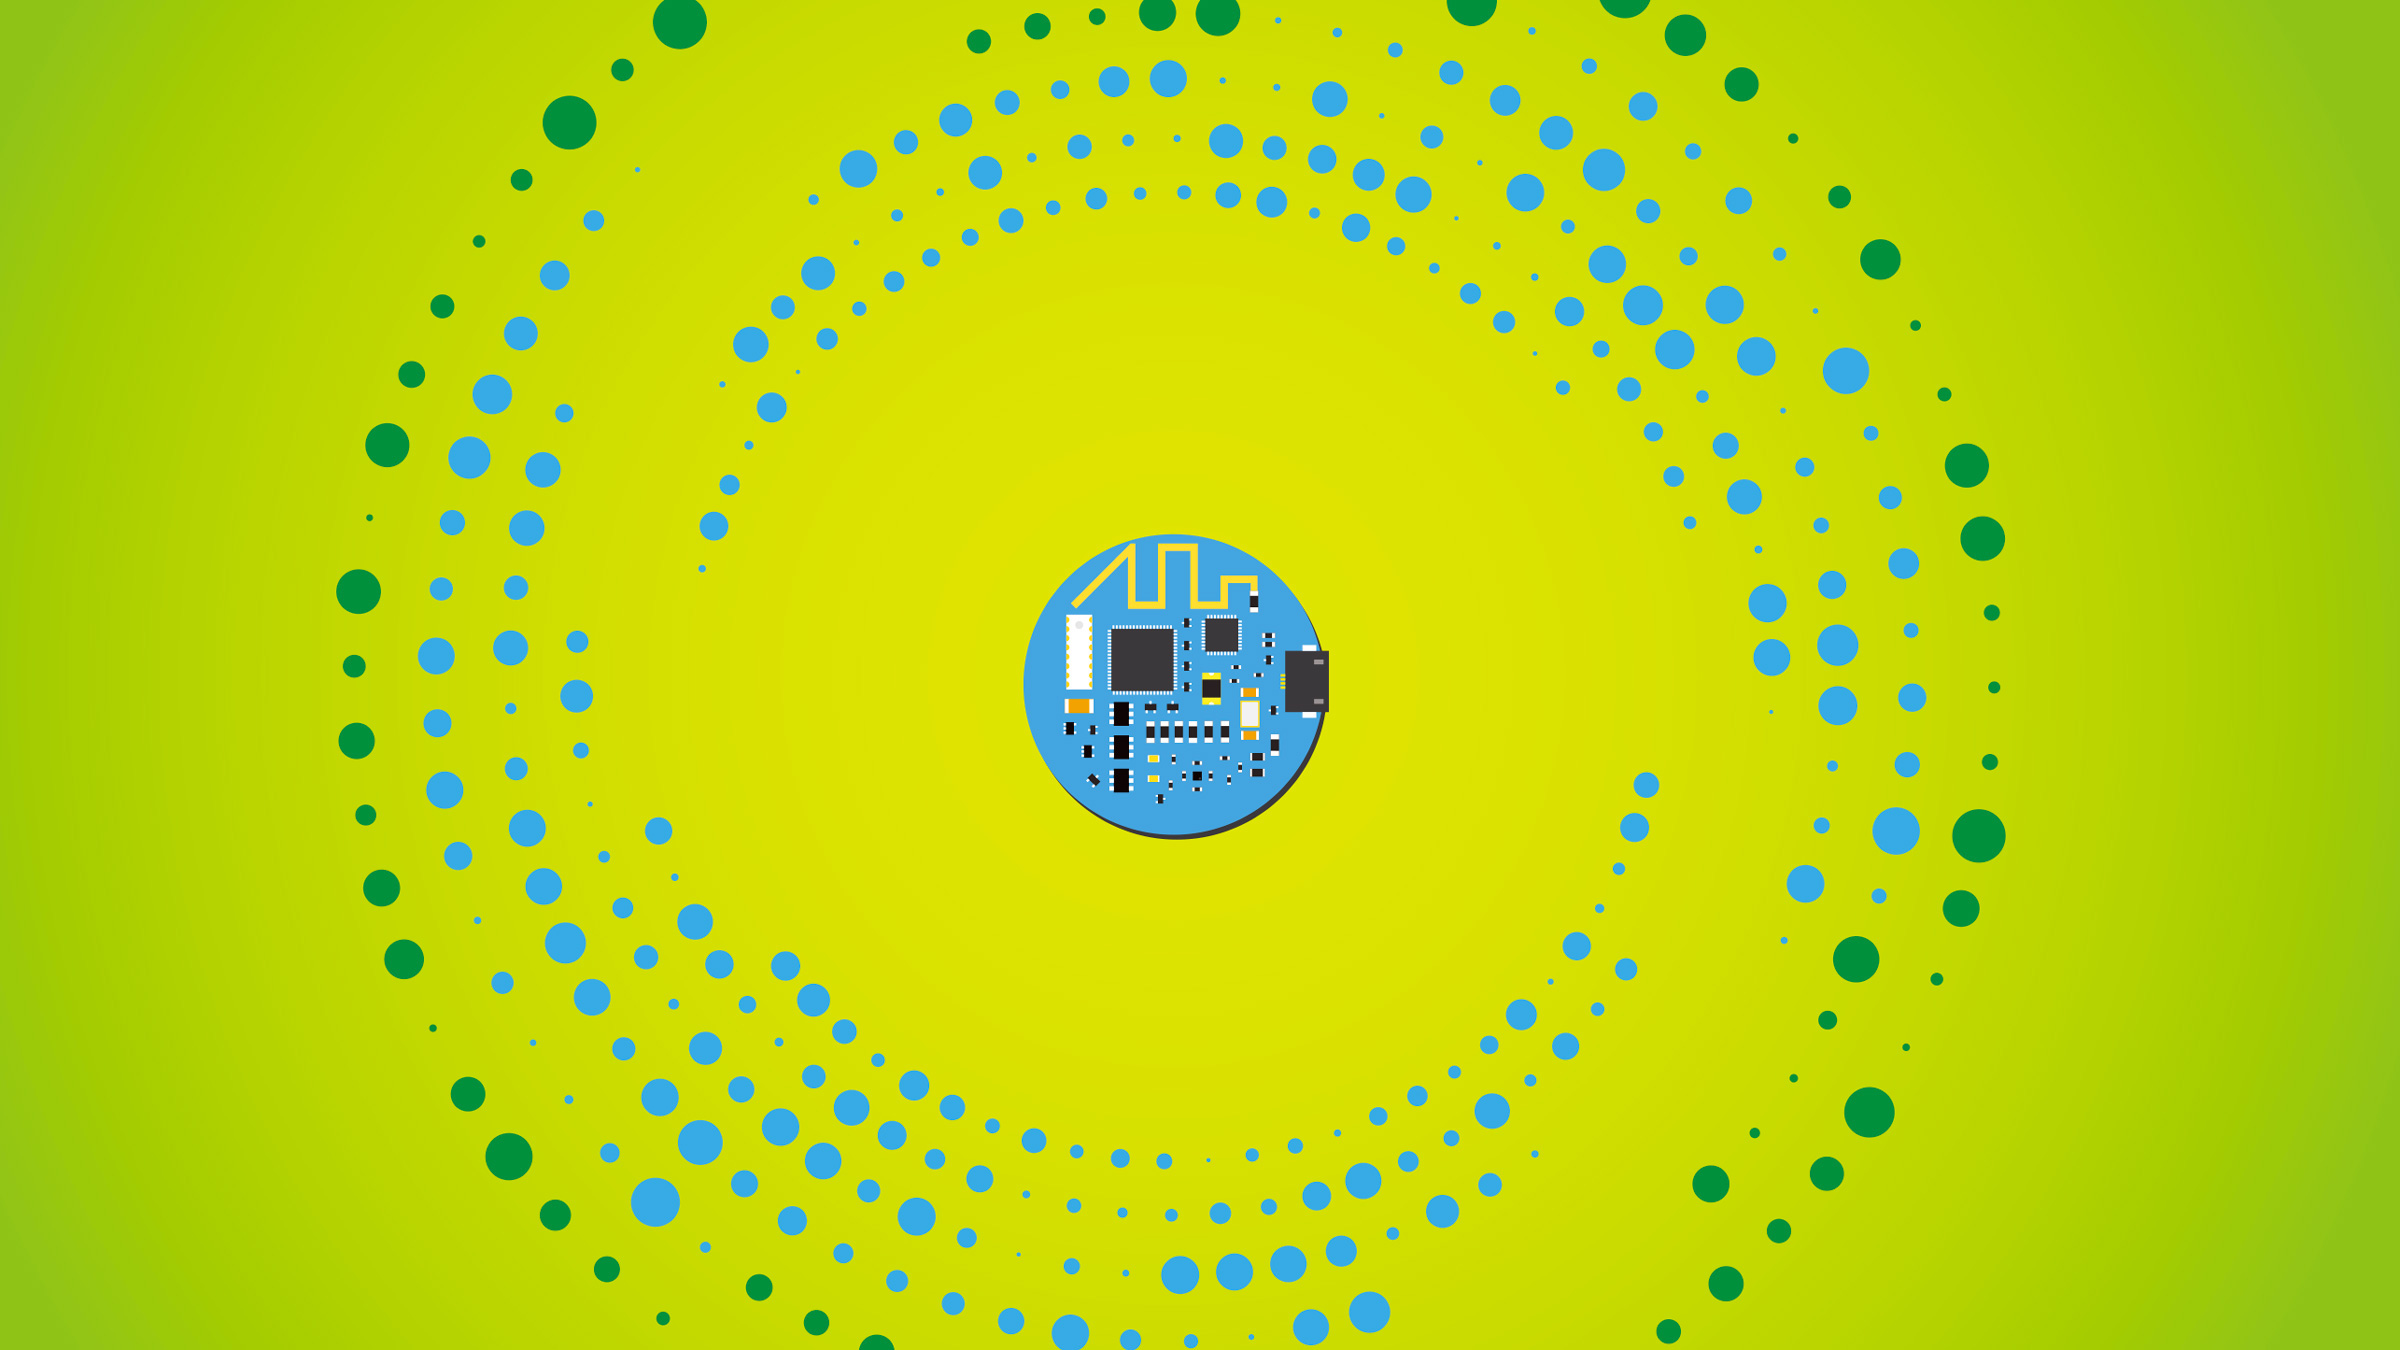 tiny, round circuit board at center of circles of dots, illustration